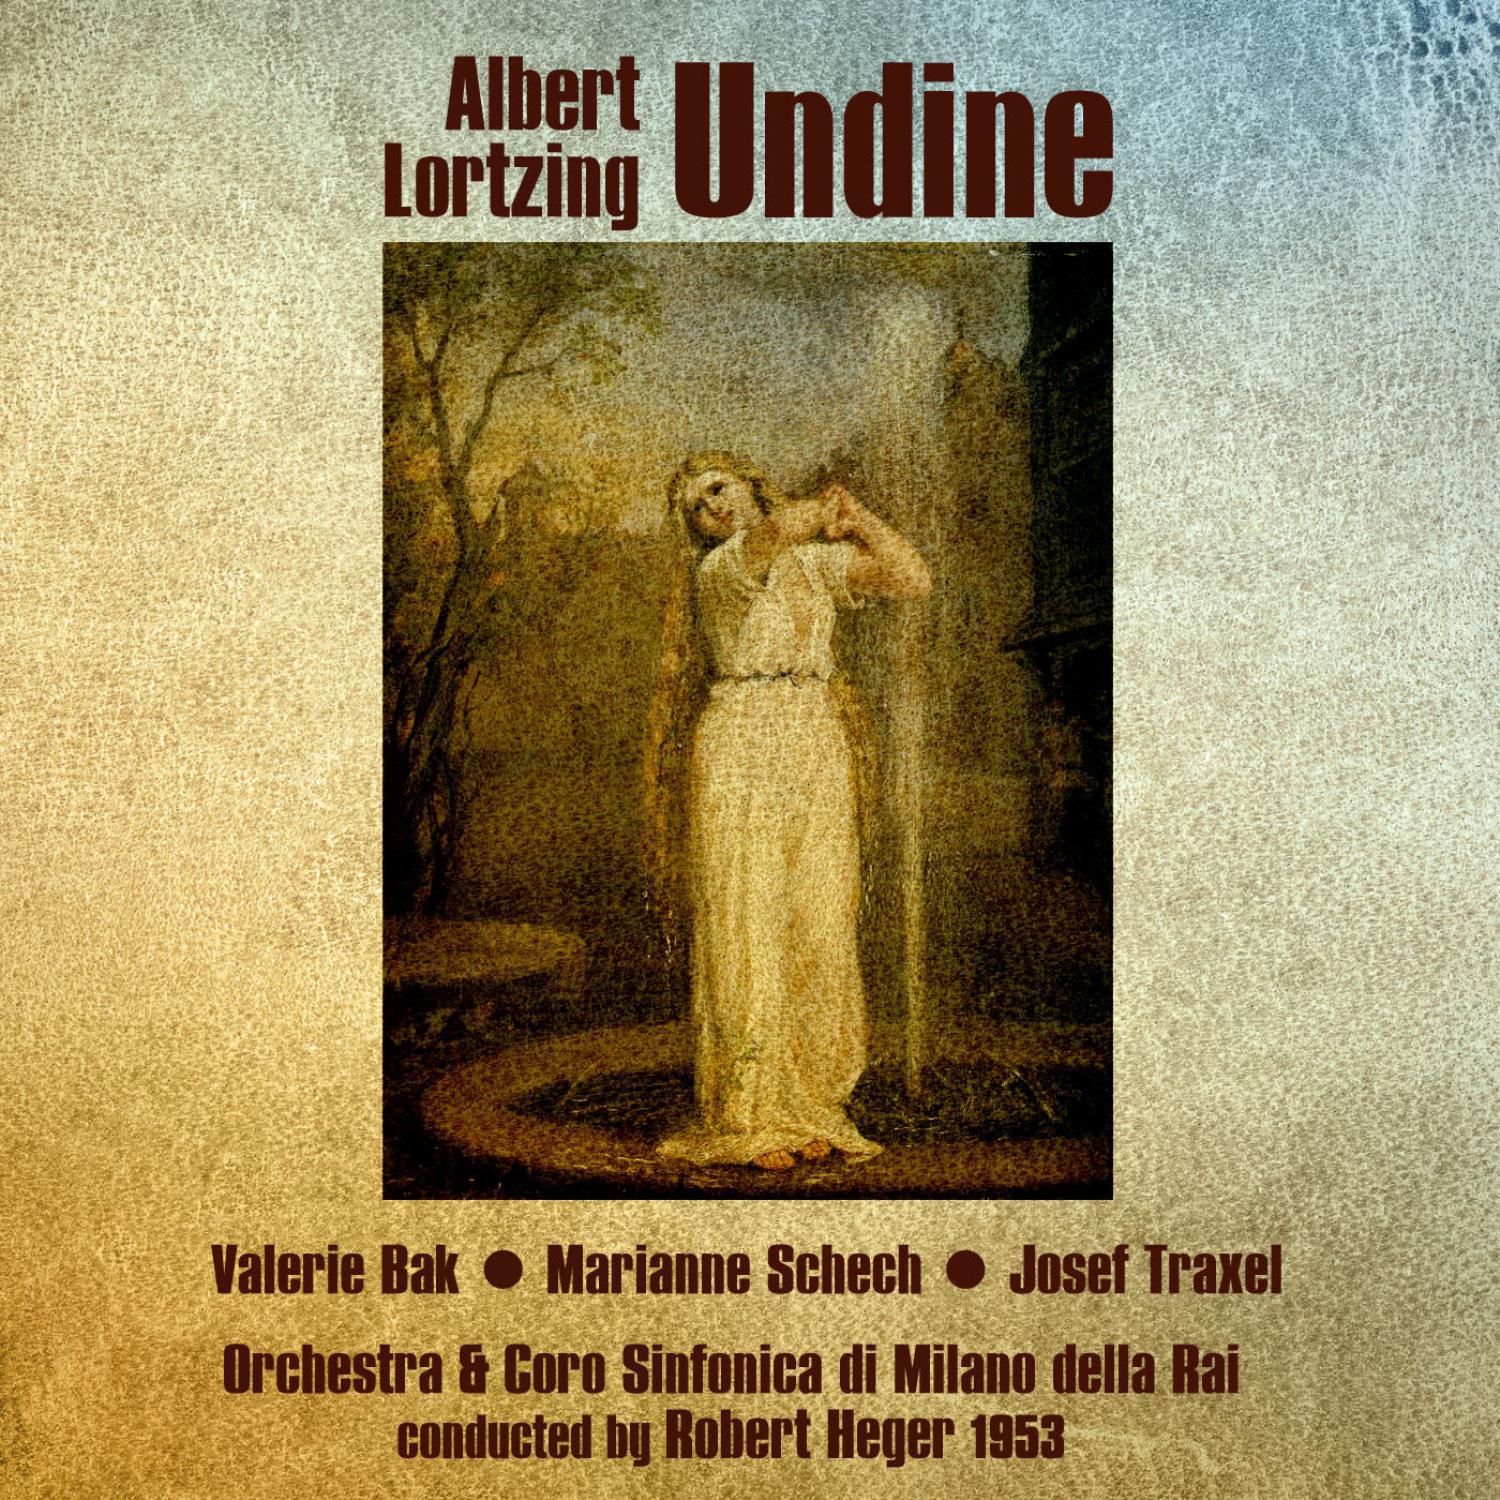 Albert Lortzing: Undine (1953)